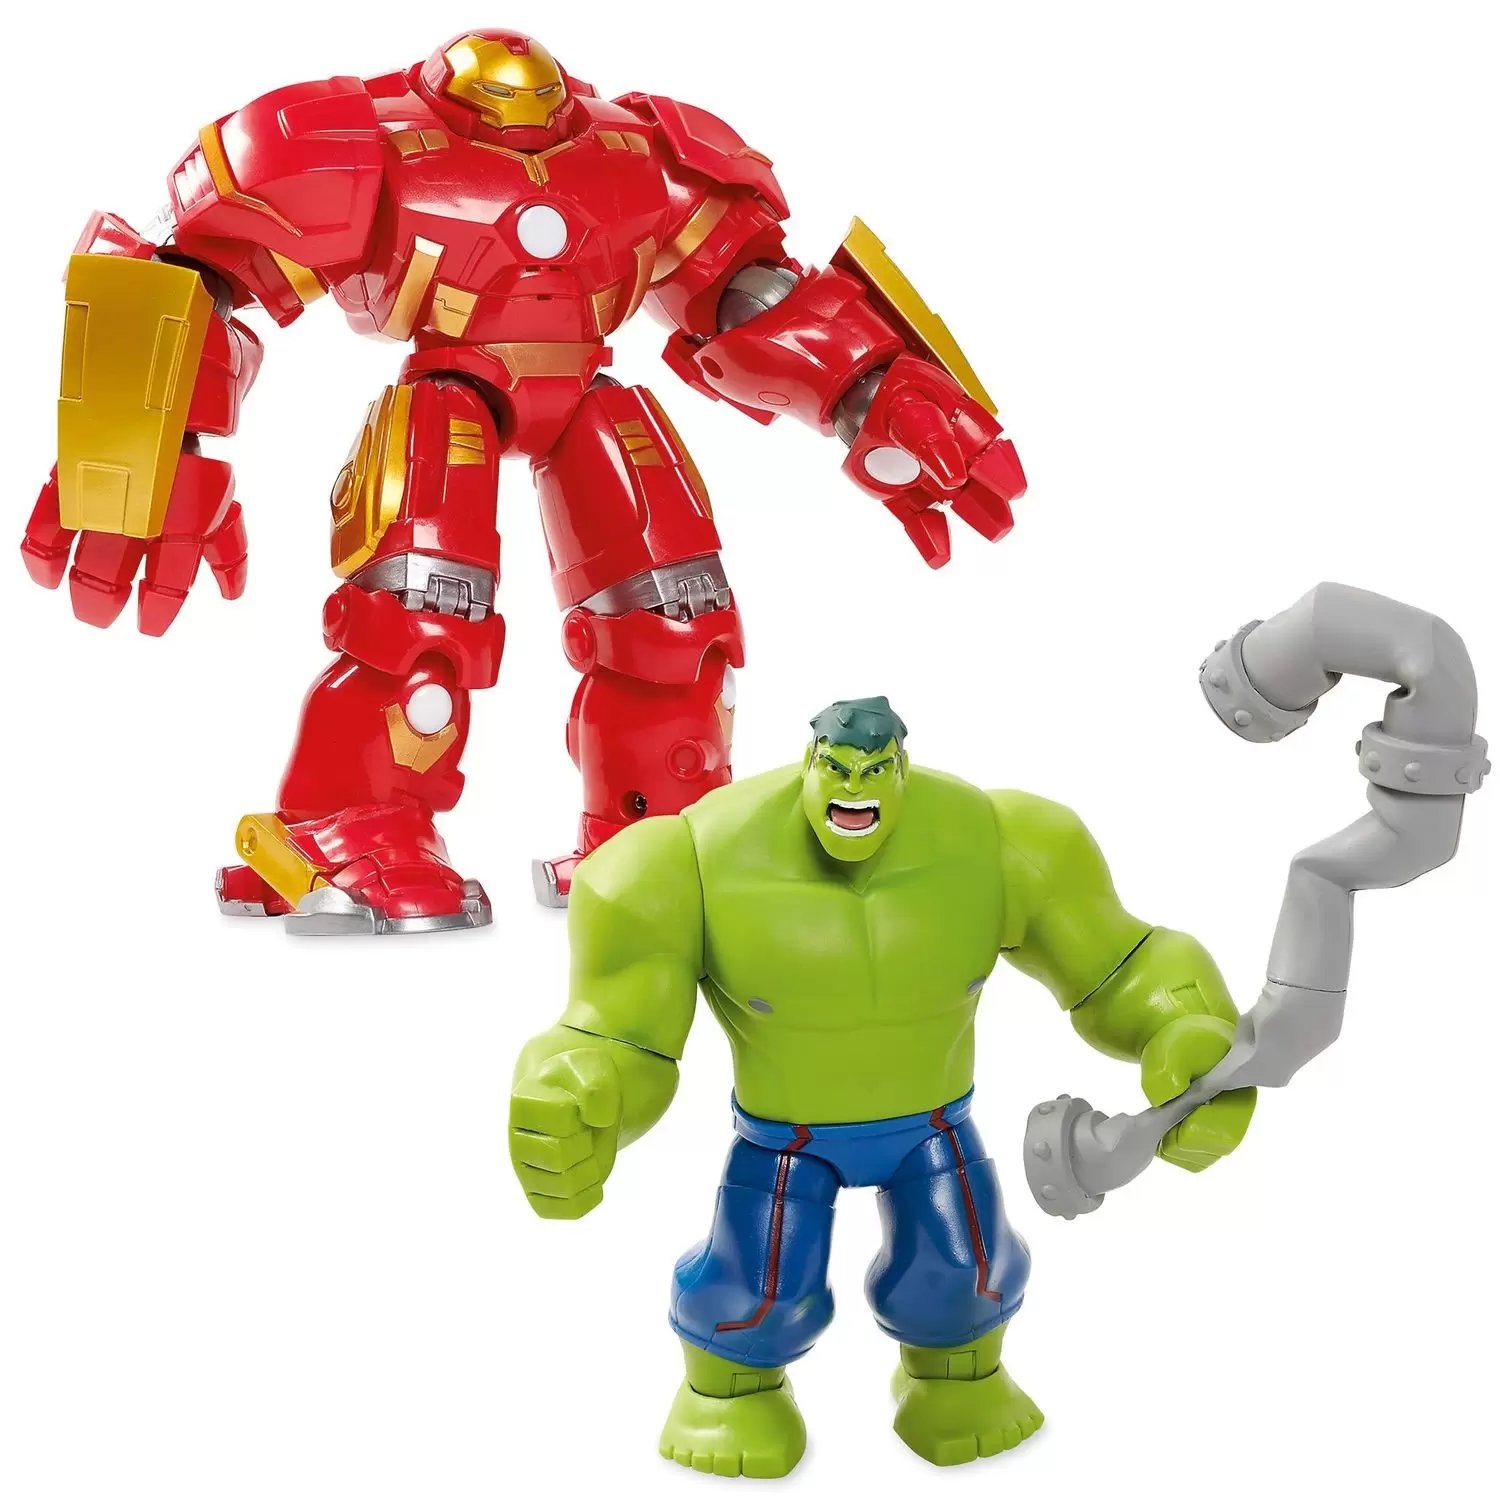 Toybox Disney - Hulkbuster and Hulk Battle Set